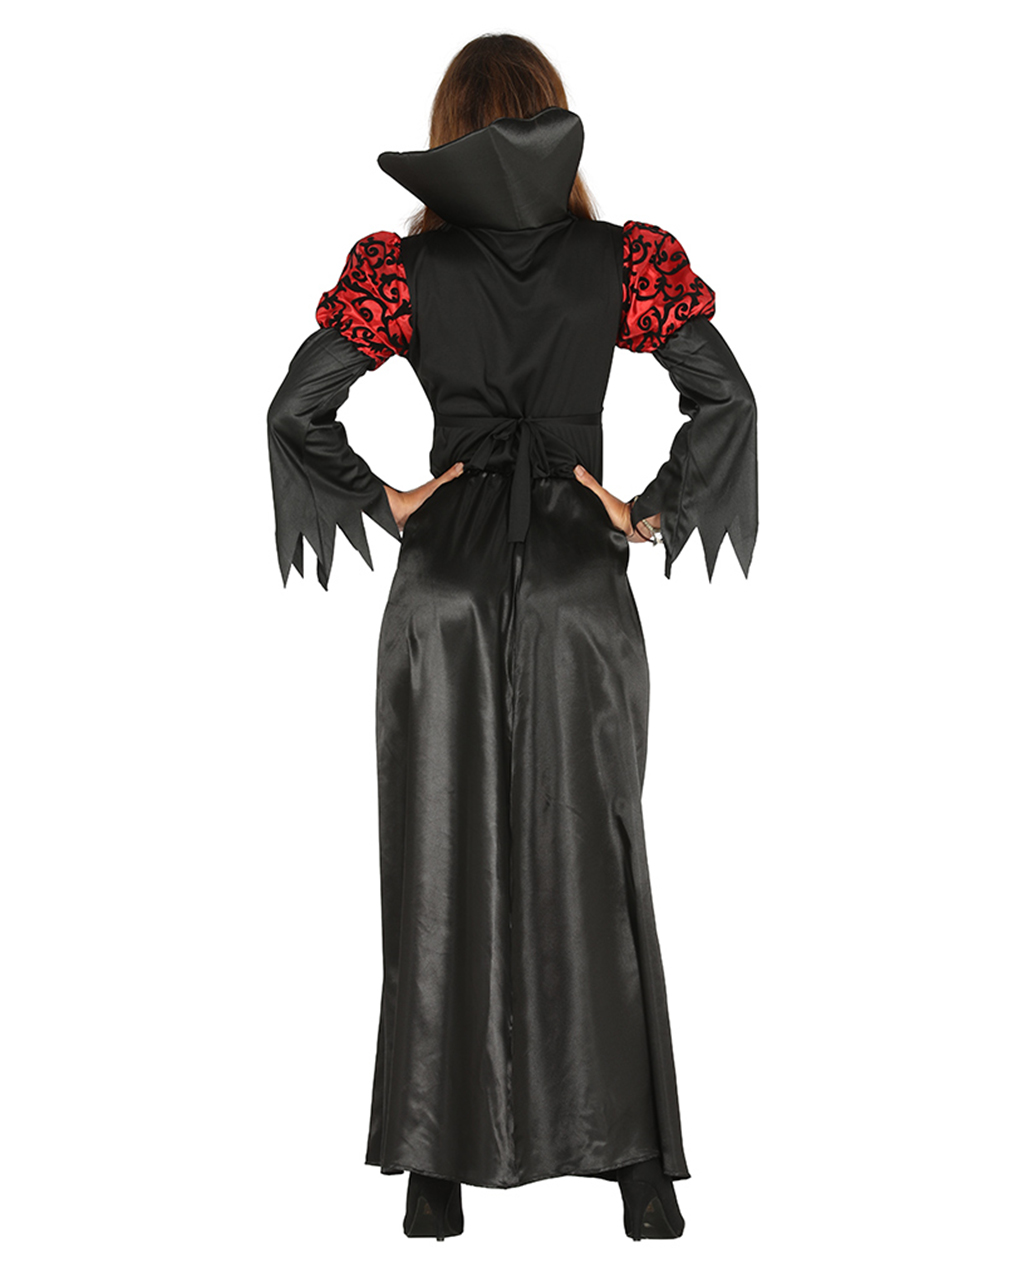 Vampire Women's Costume for Gothic & Halloween Party | horror-shop.com